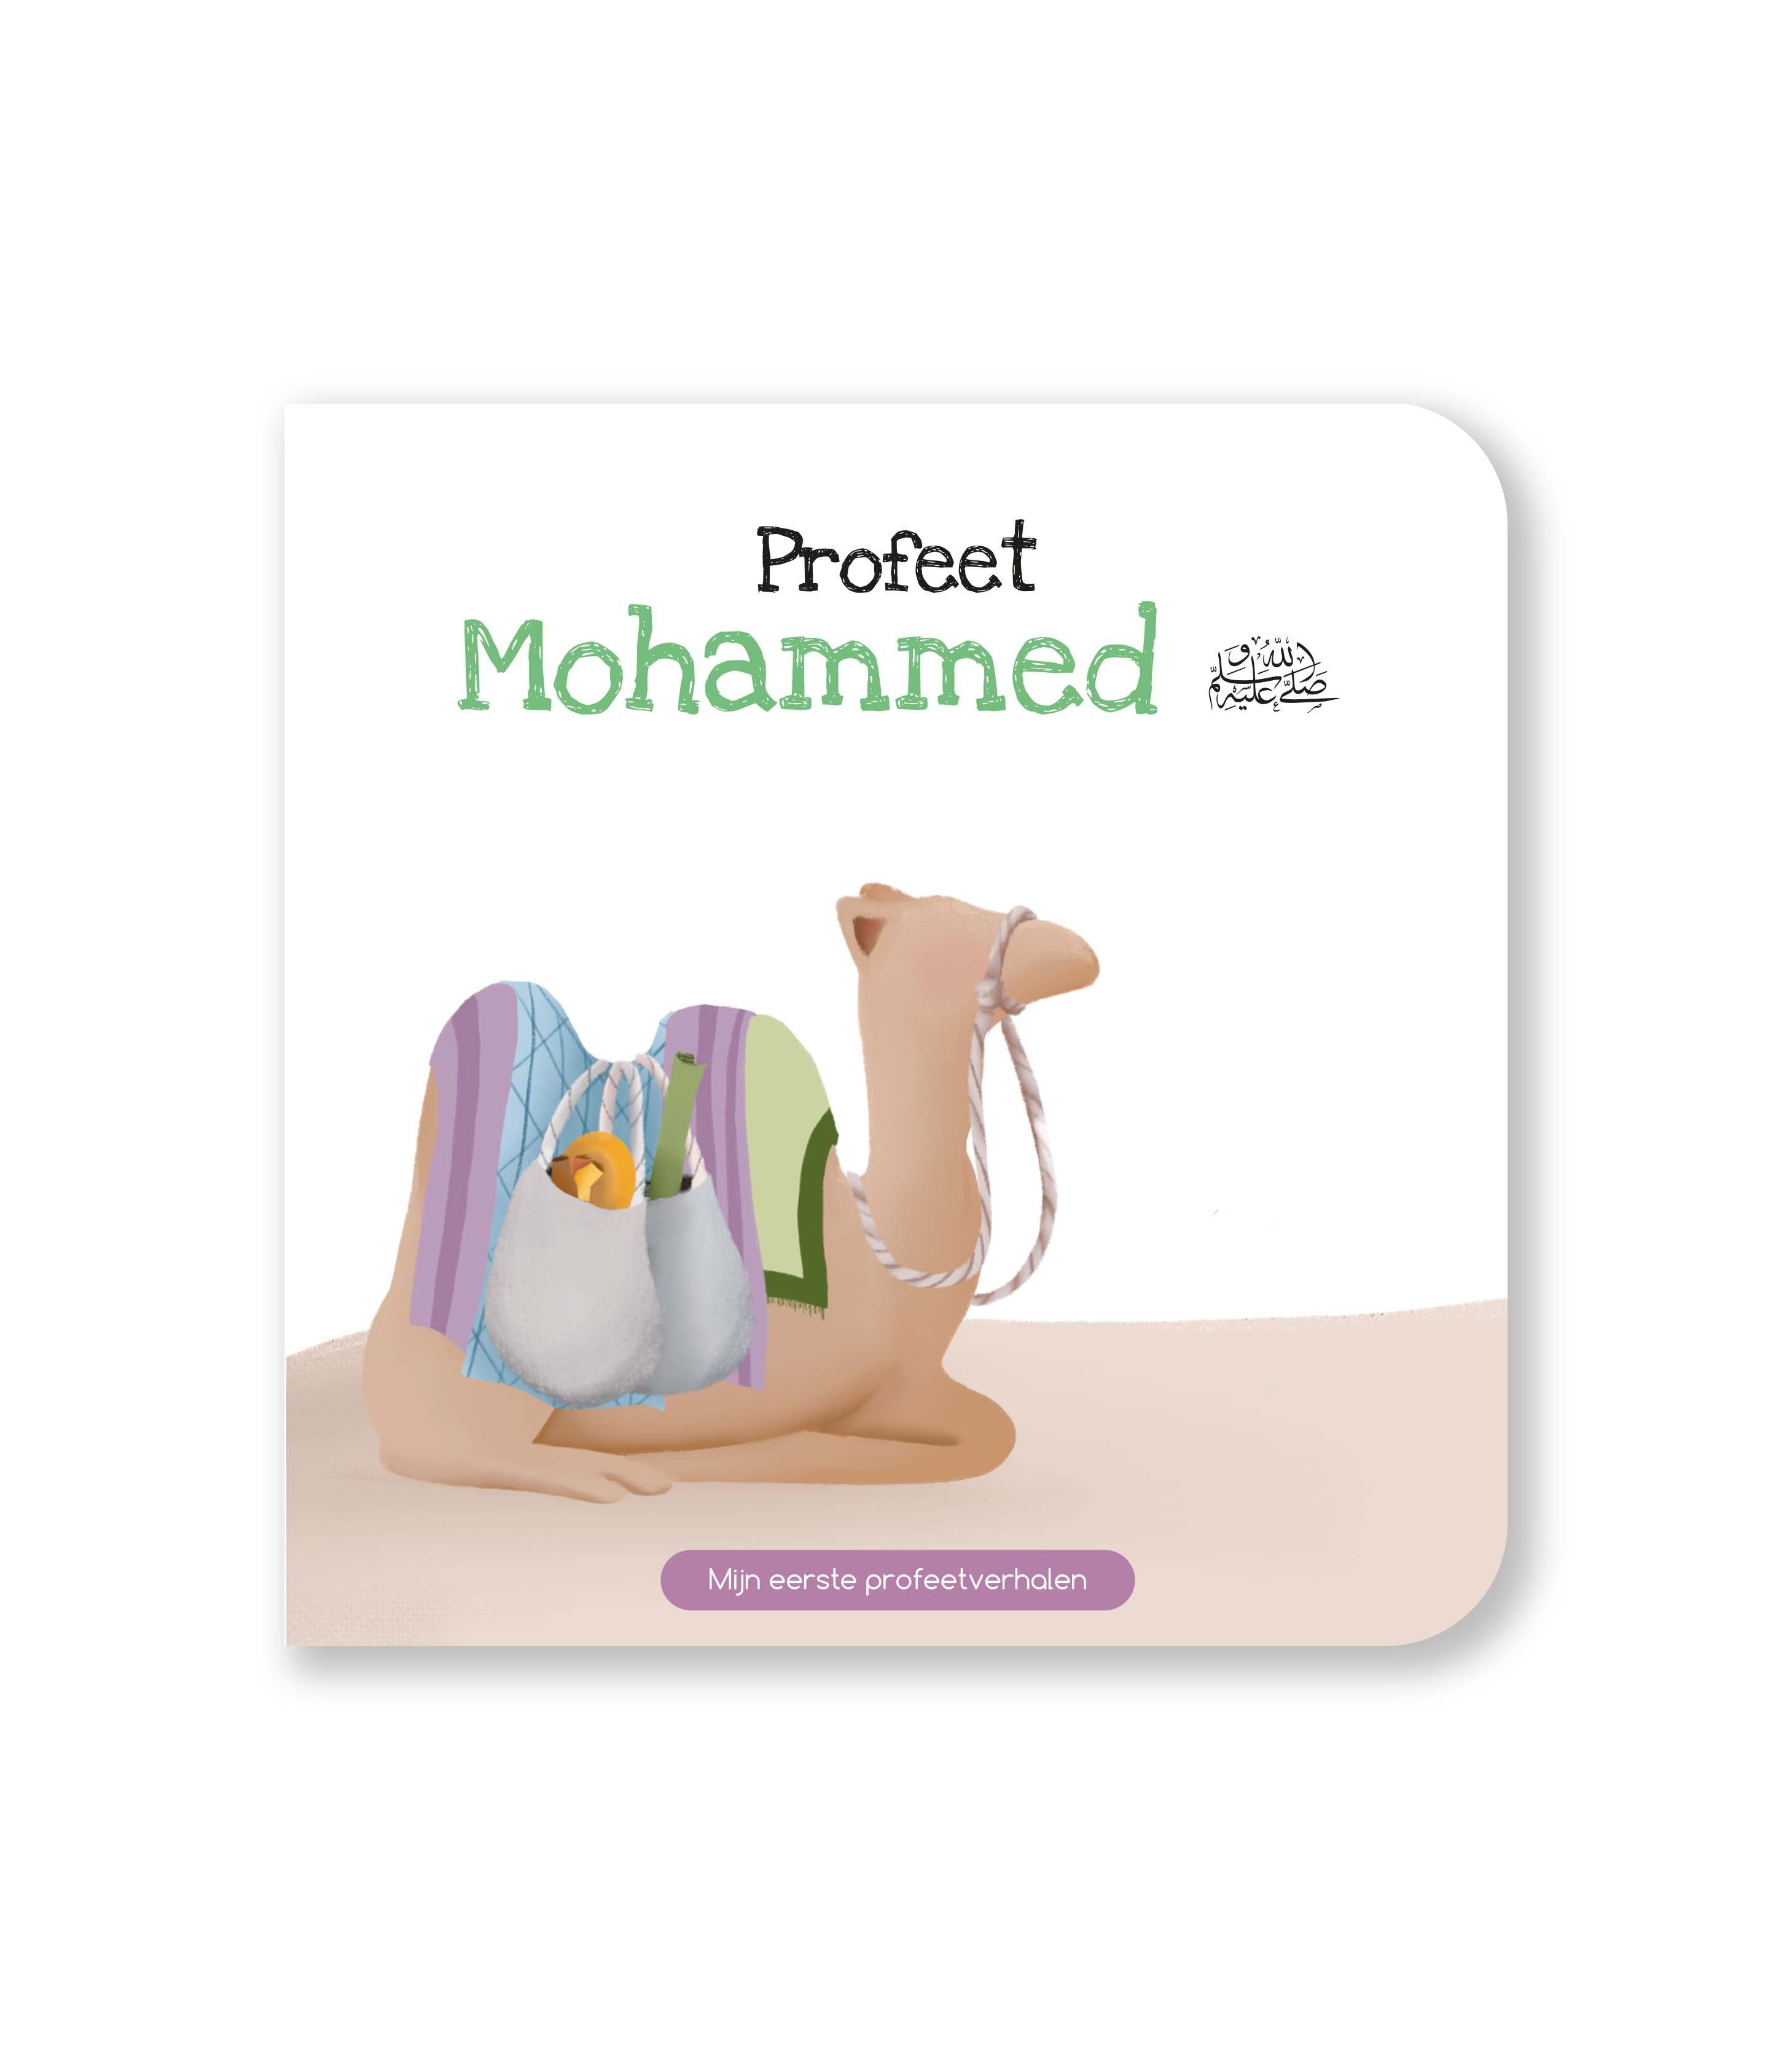 Profeet Mohammed